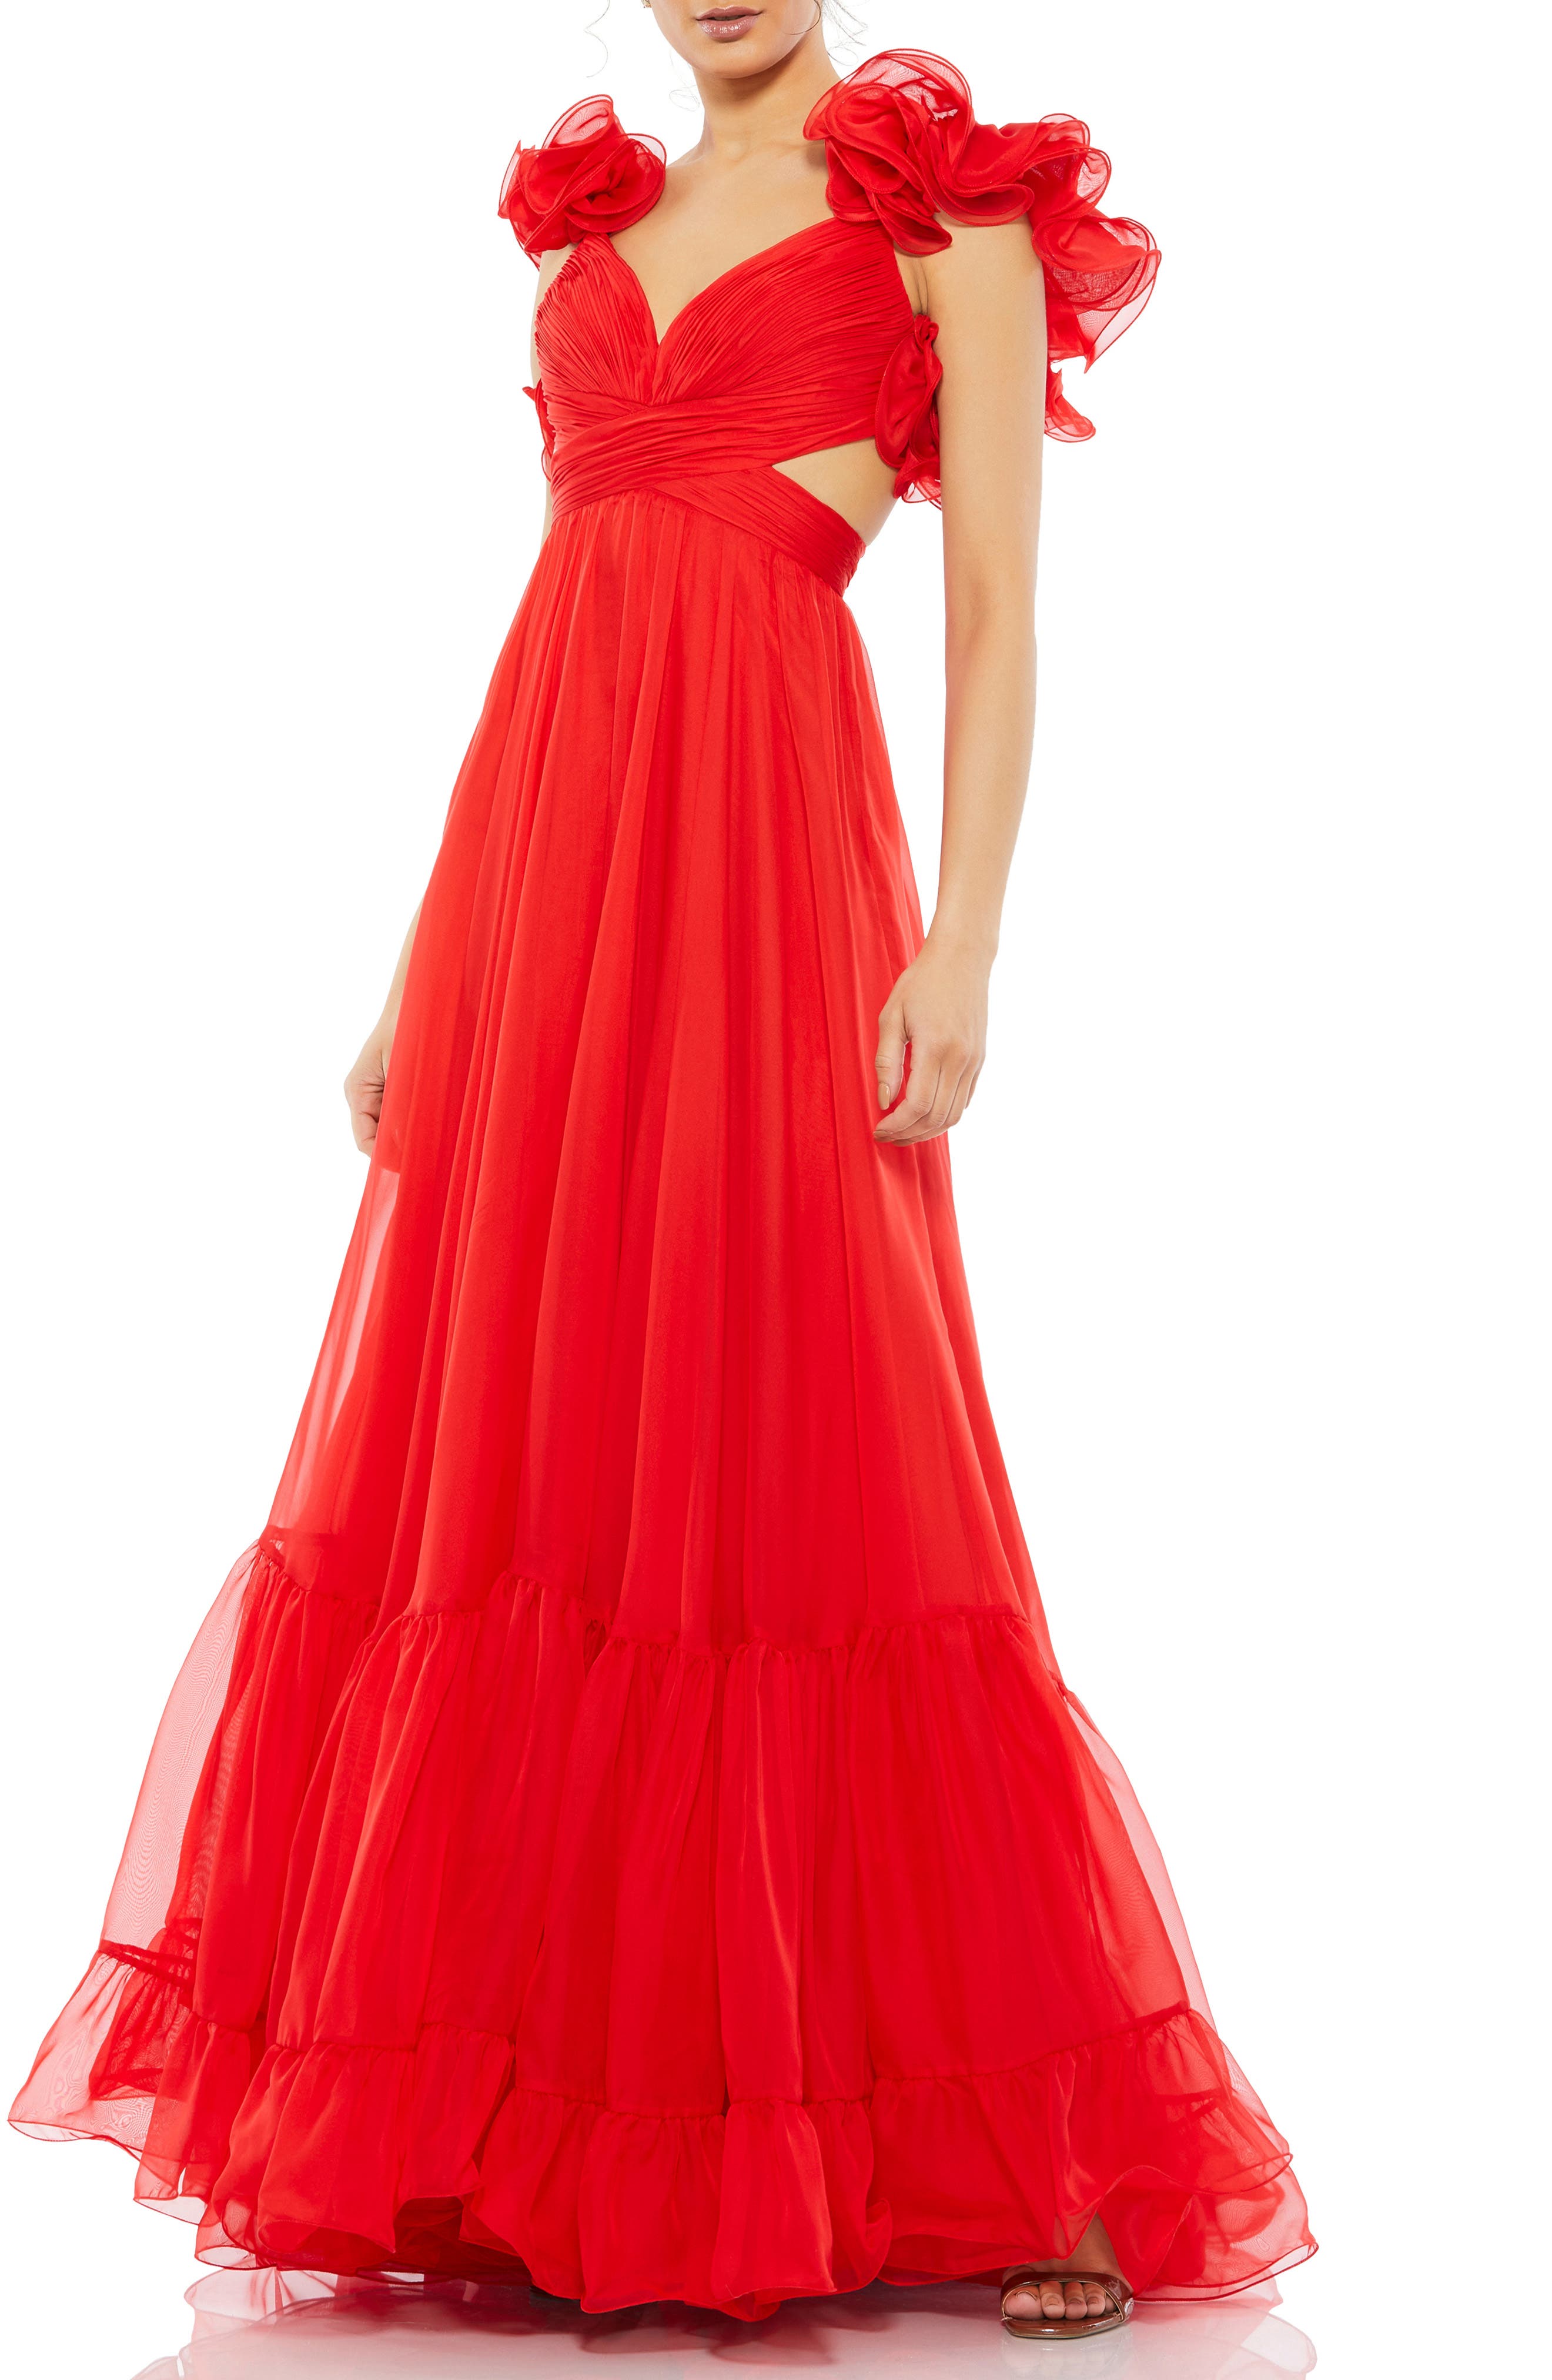 nordstrom red dress